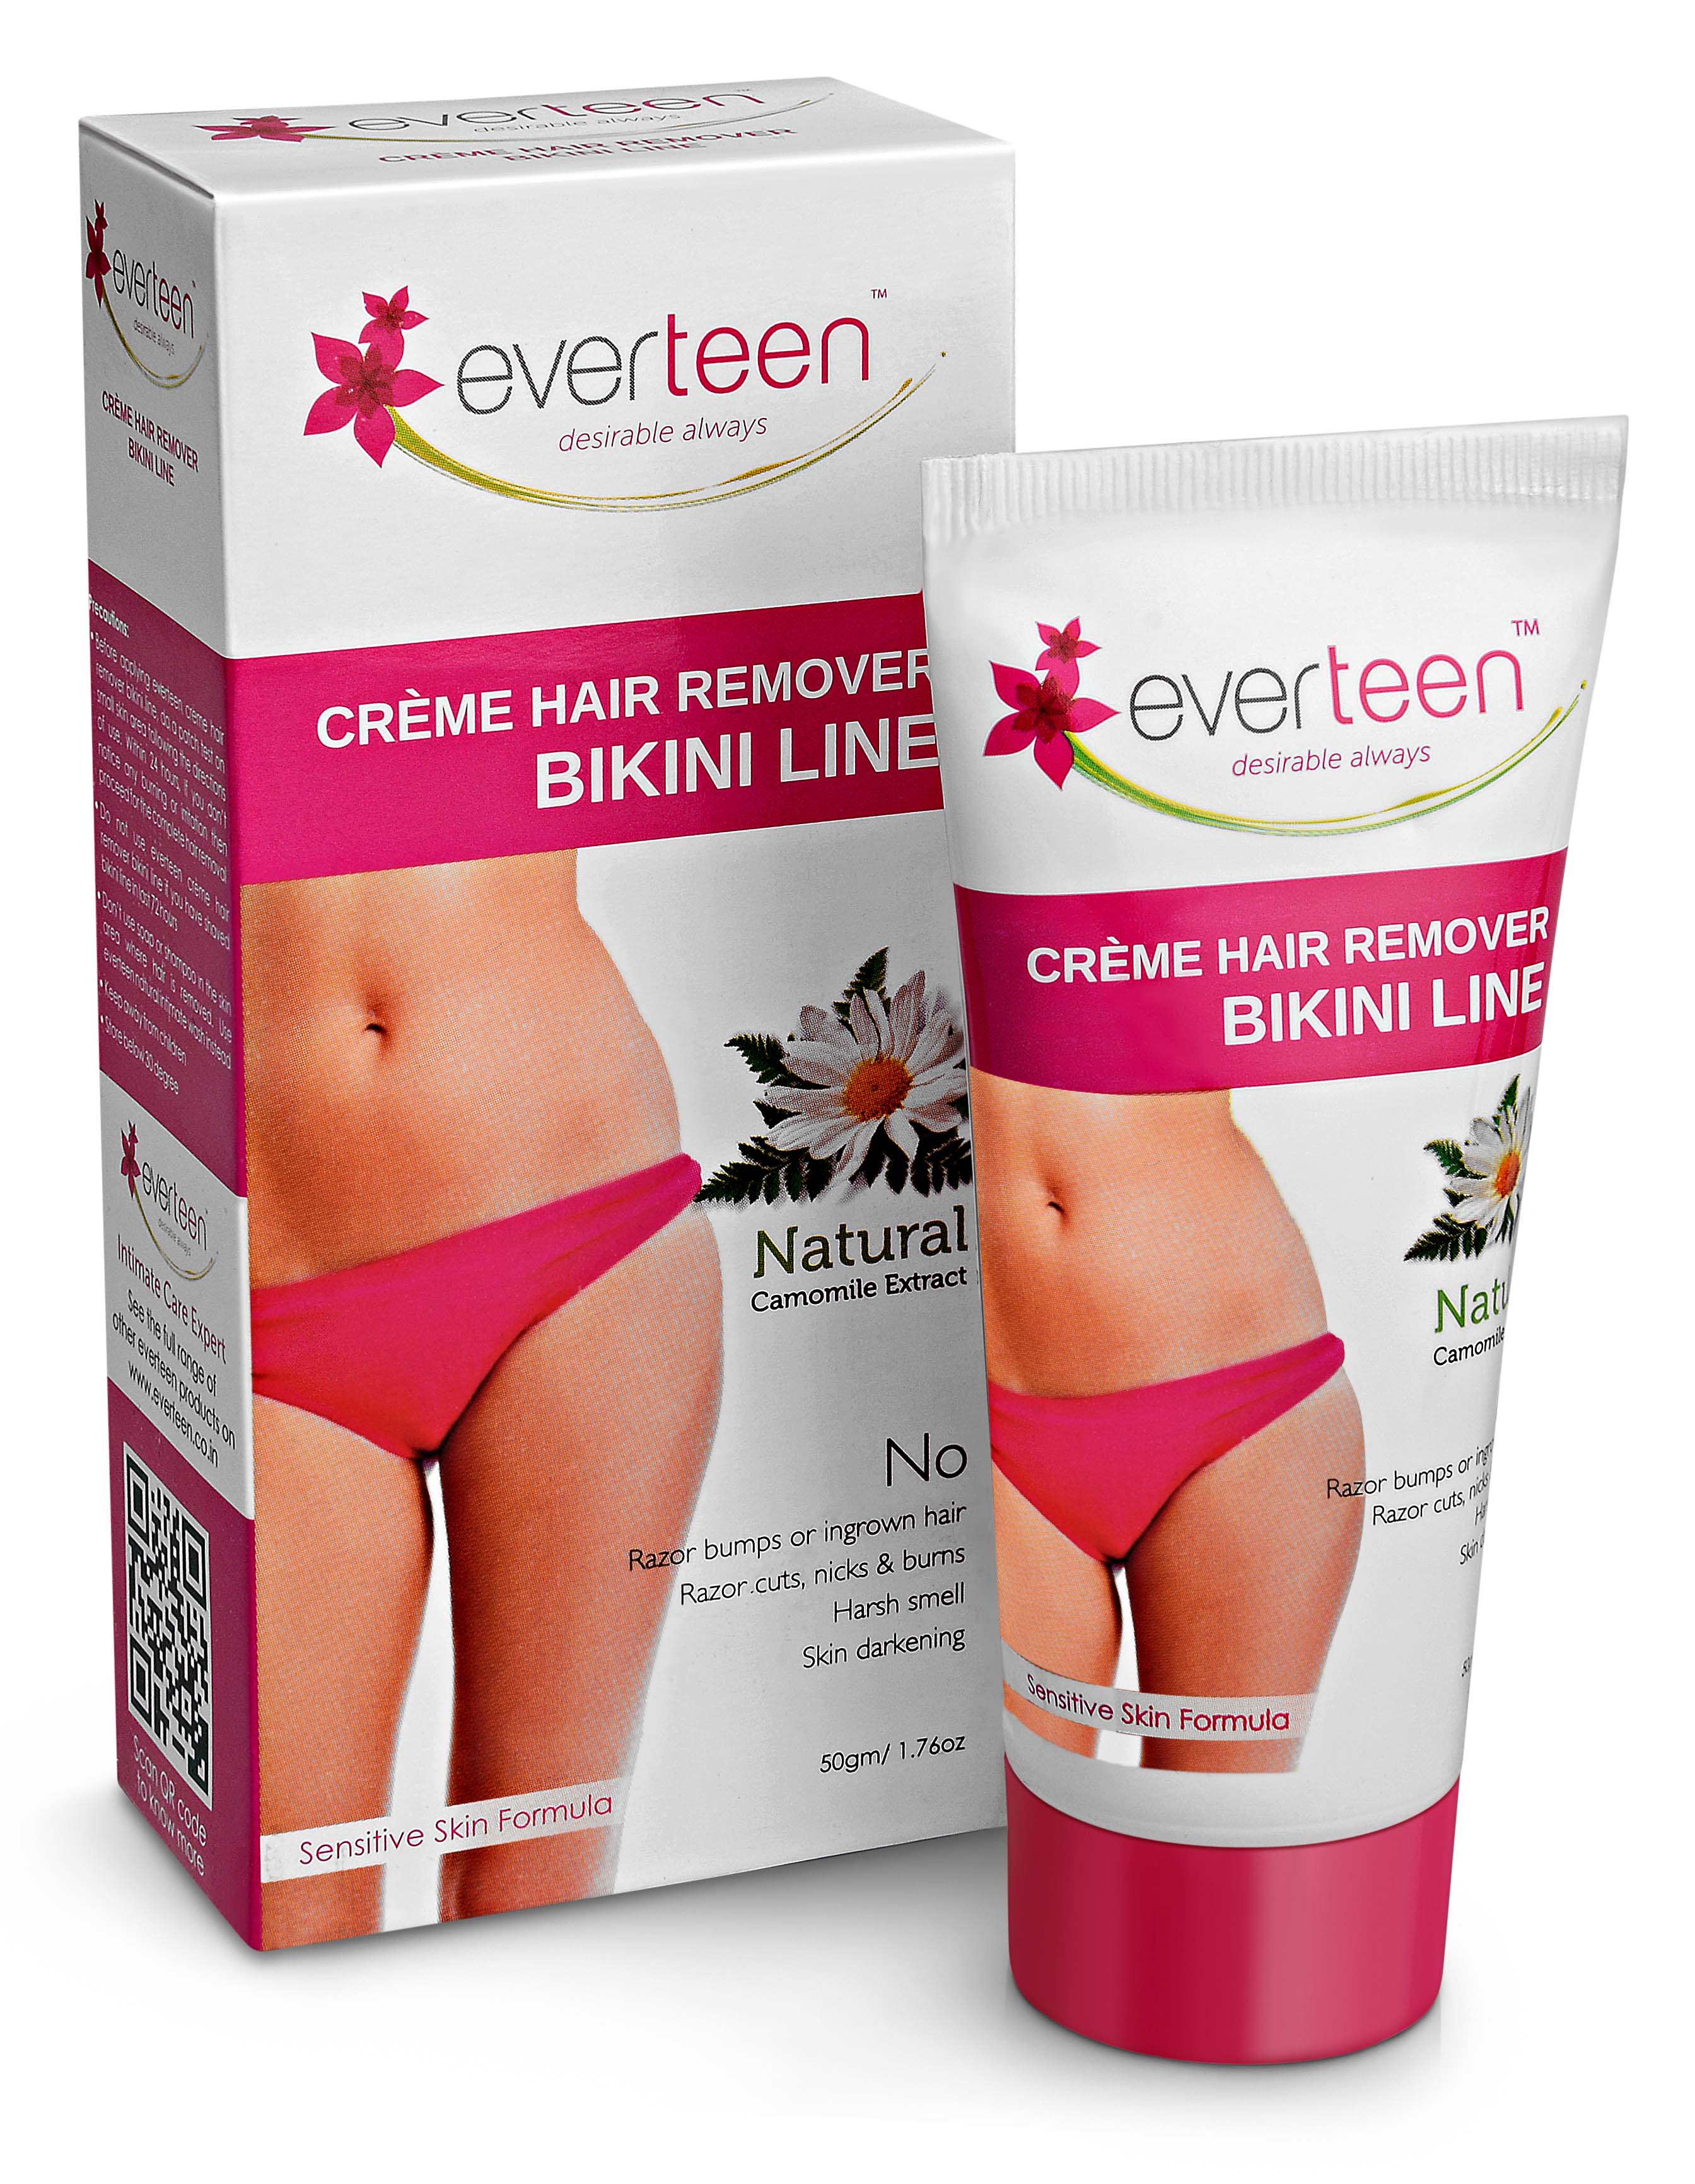 Everteen bikini line hair removal